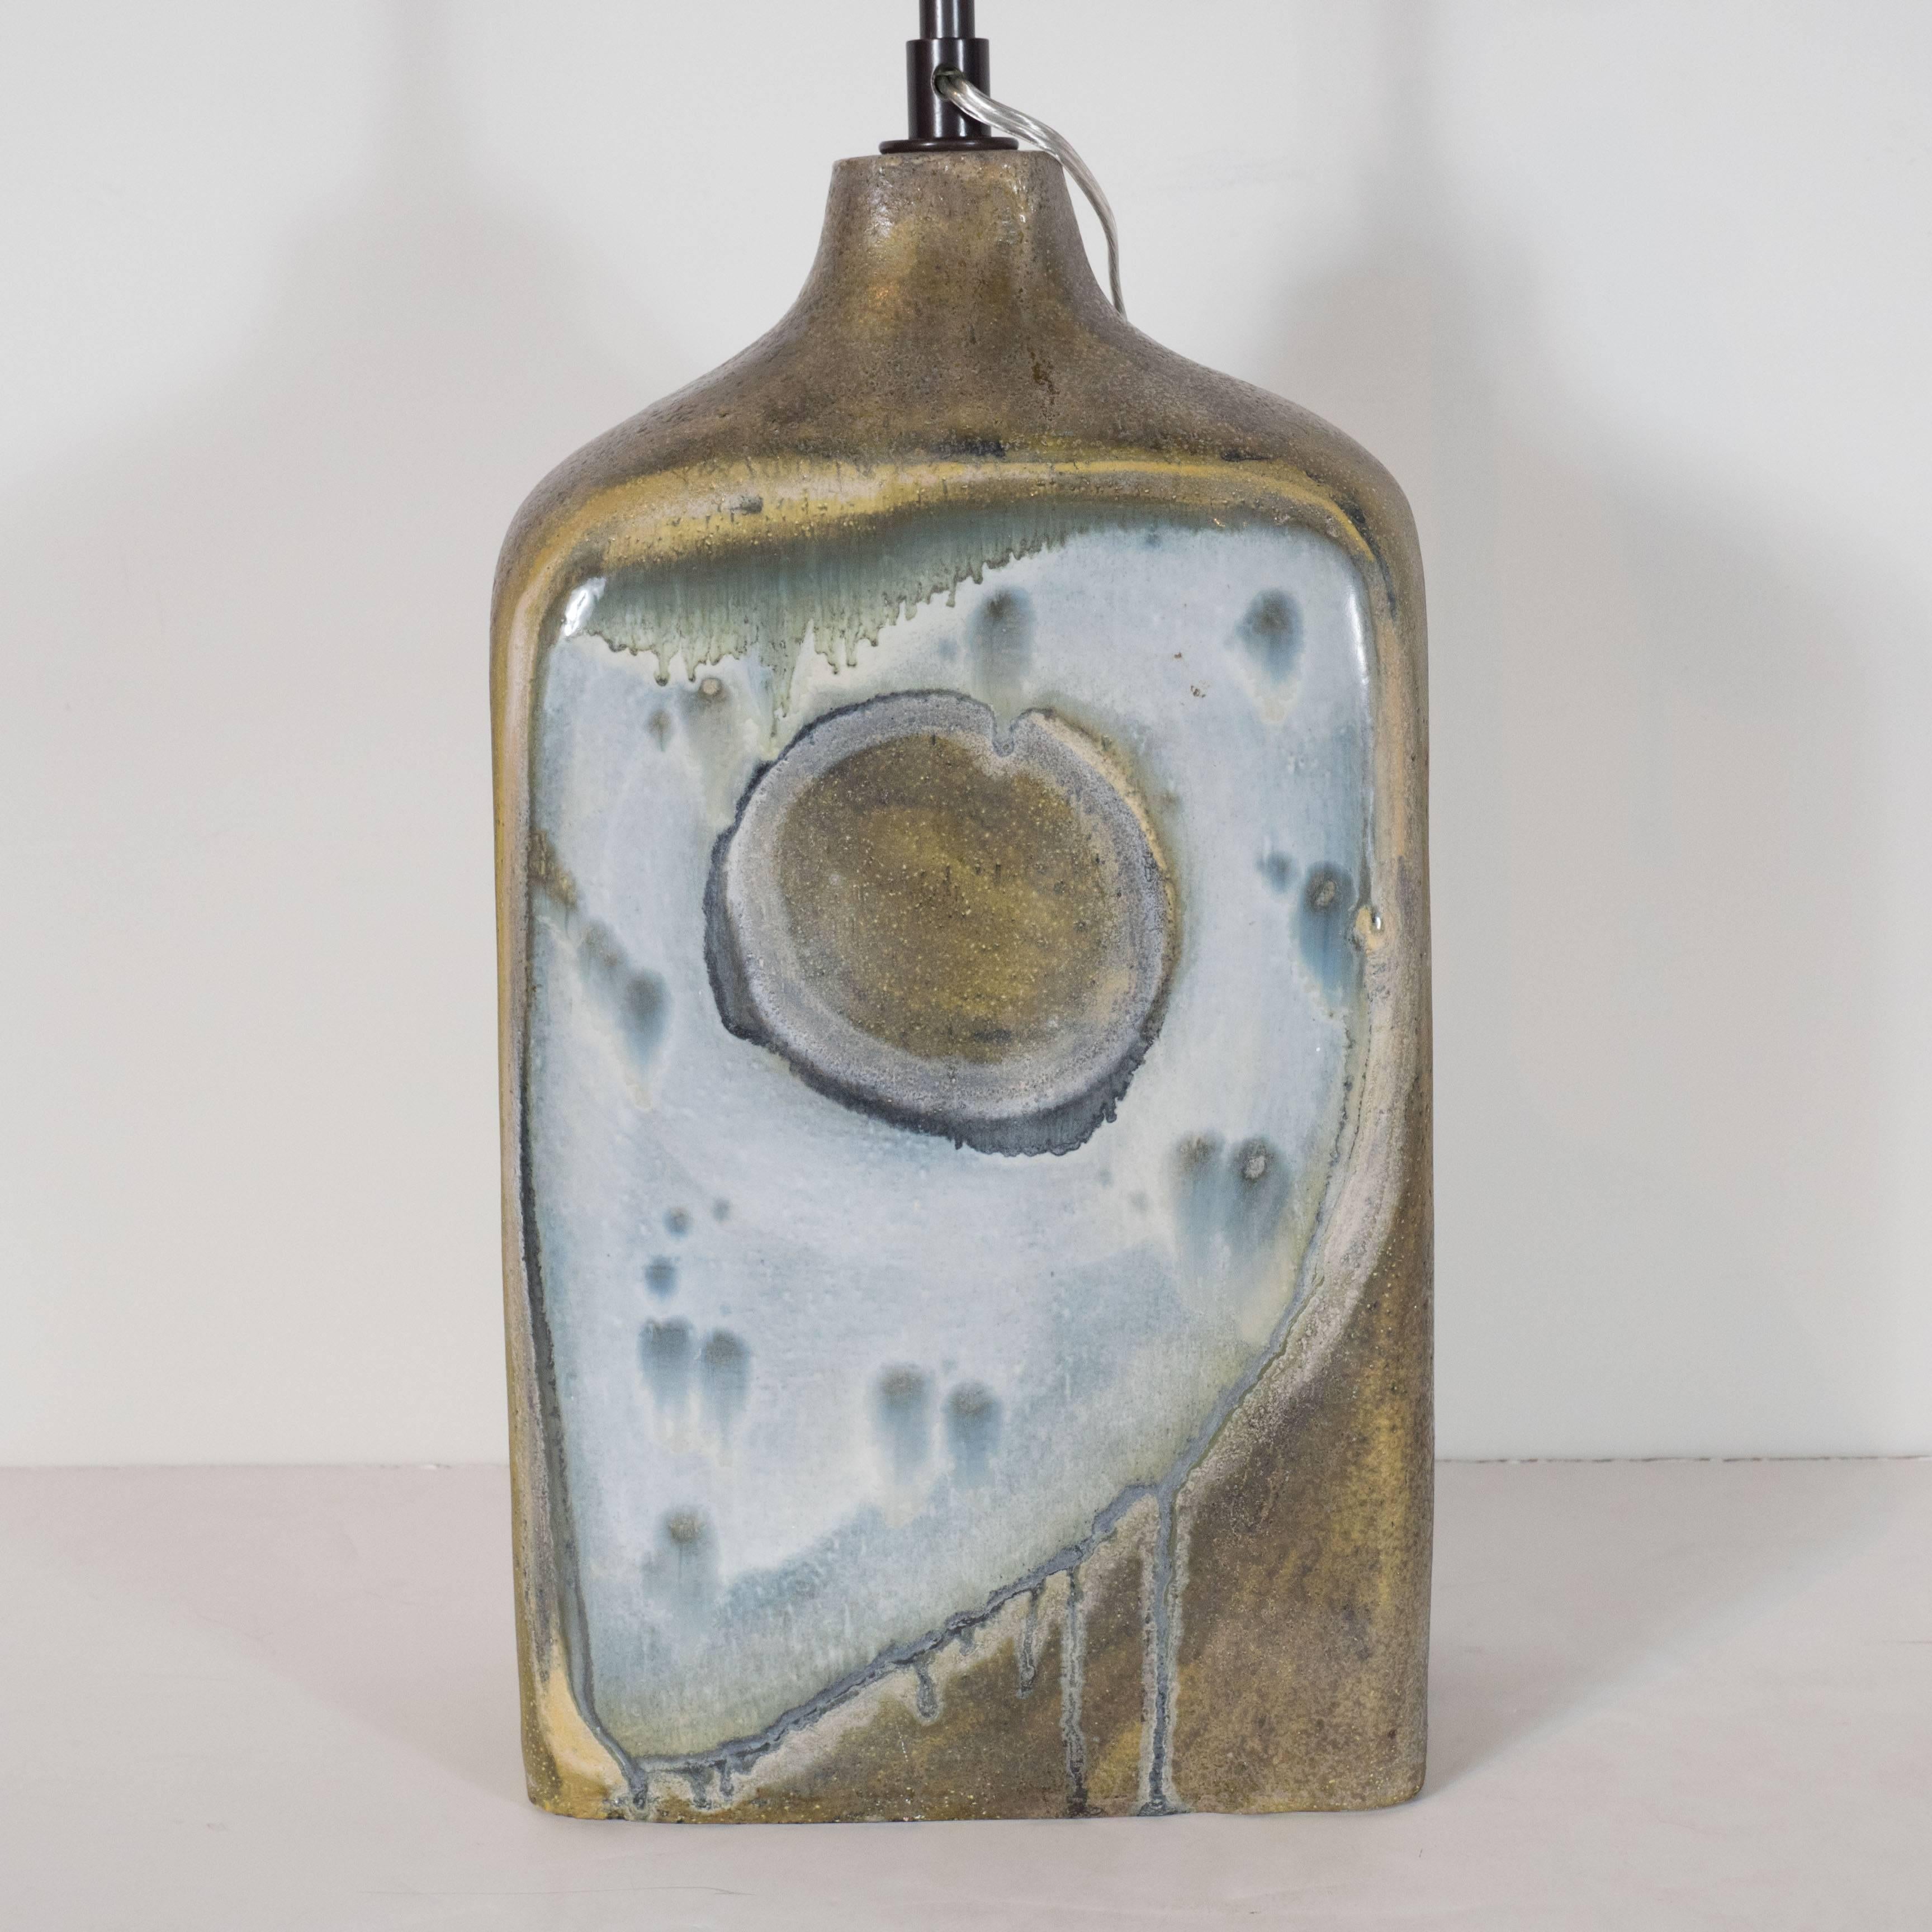 Italian Fantoni Ceramic Square Table Lamp, Signed 'Fantoni', Numbered, Italy, 1950s For Sale